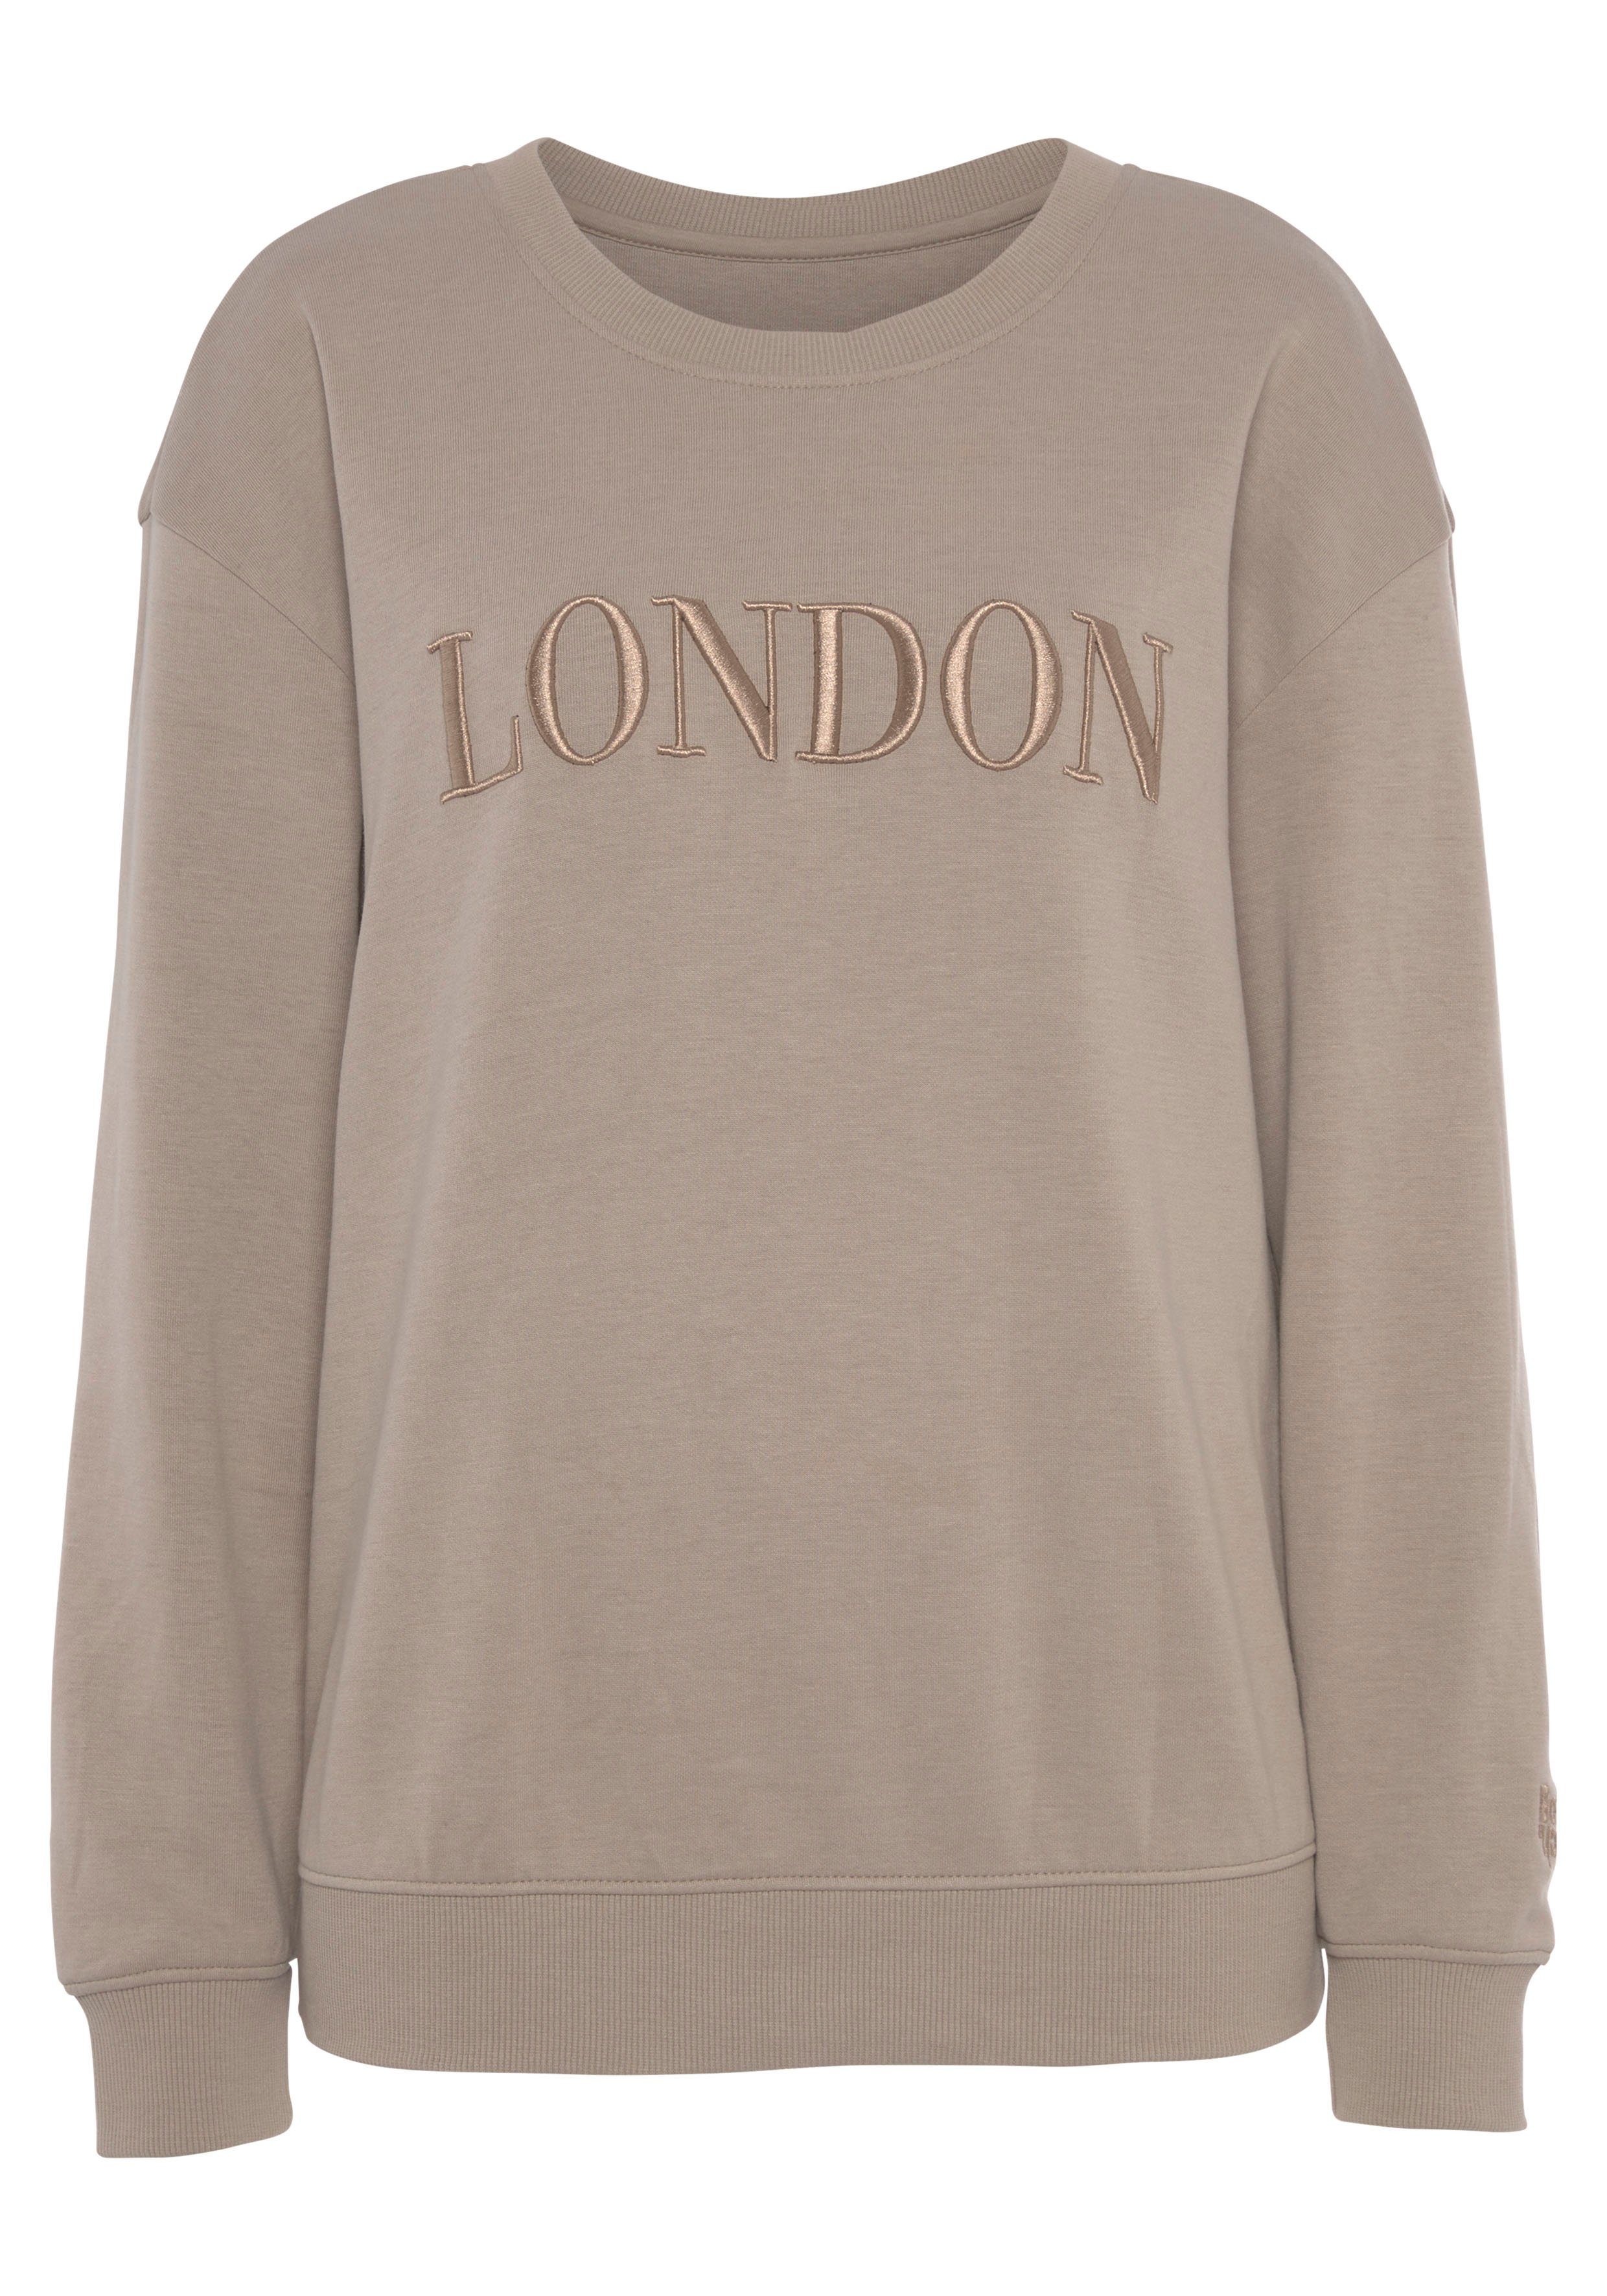 Stickerei, -Loungeshirt Vivance Loungeanzug, Loungewear Sweatshirt taupe mit London